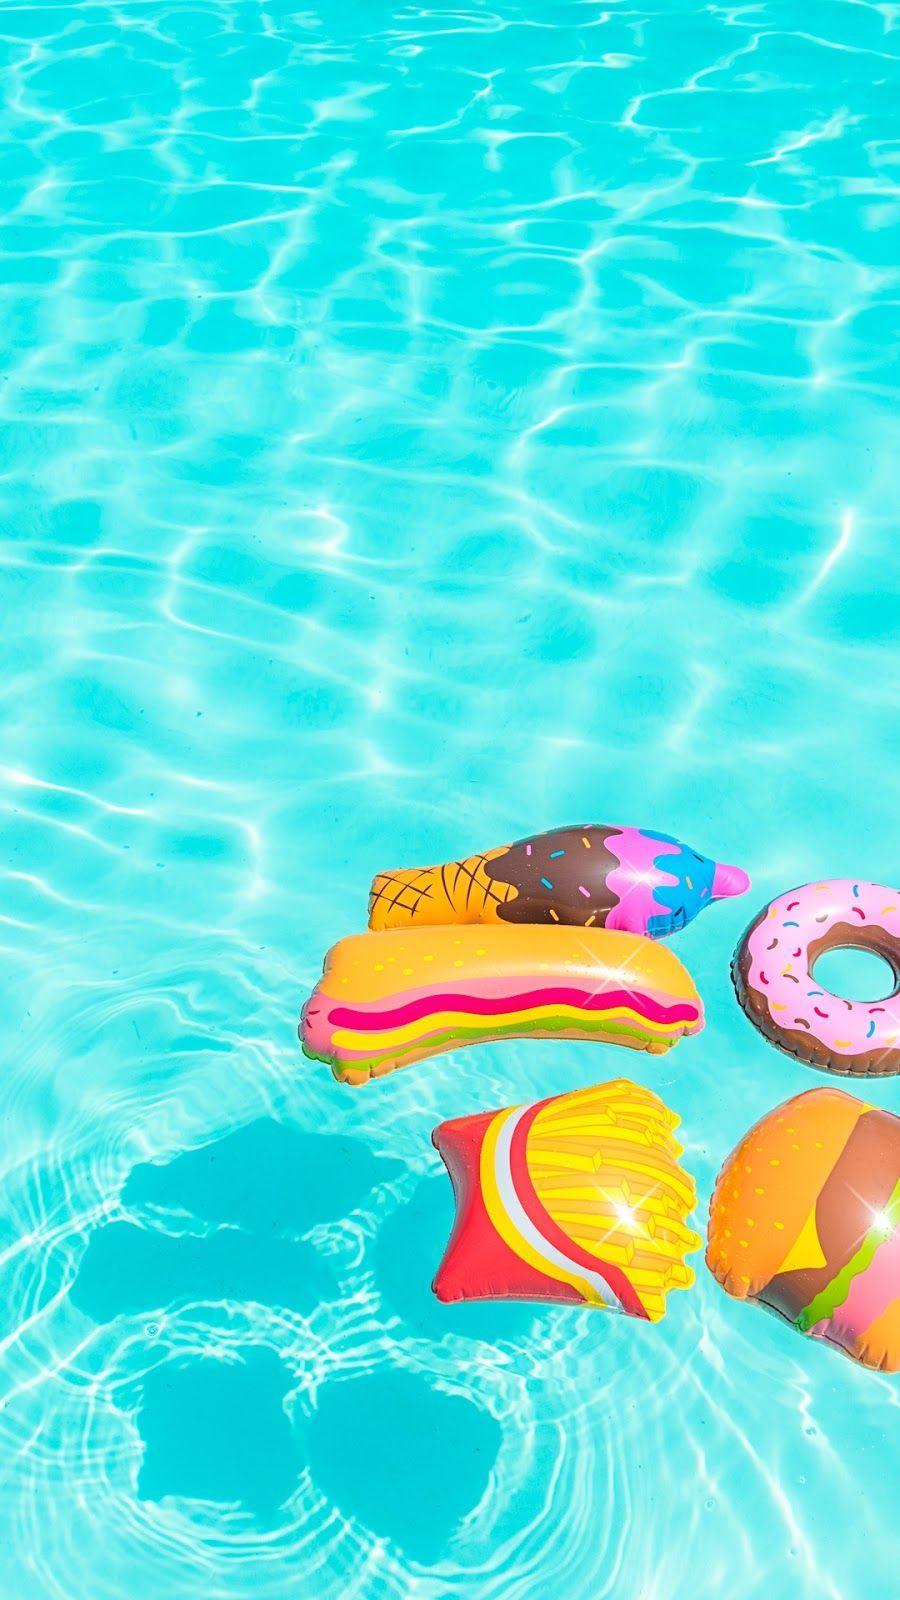 Swimming pool mobile wallpaper. PHONE WALLPAPERS. Summer